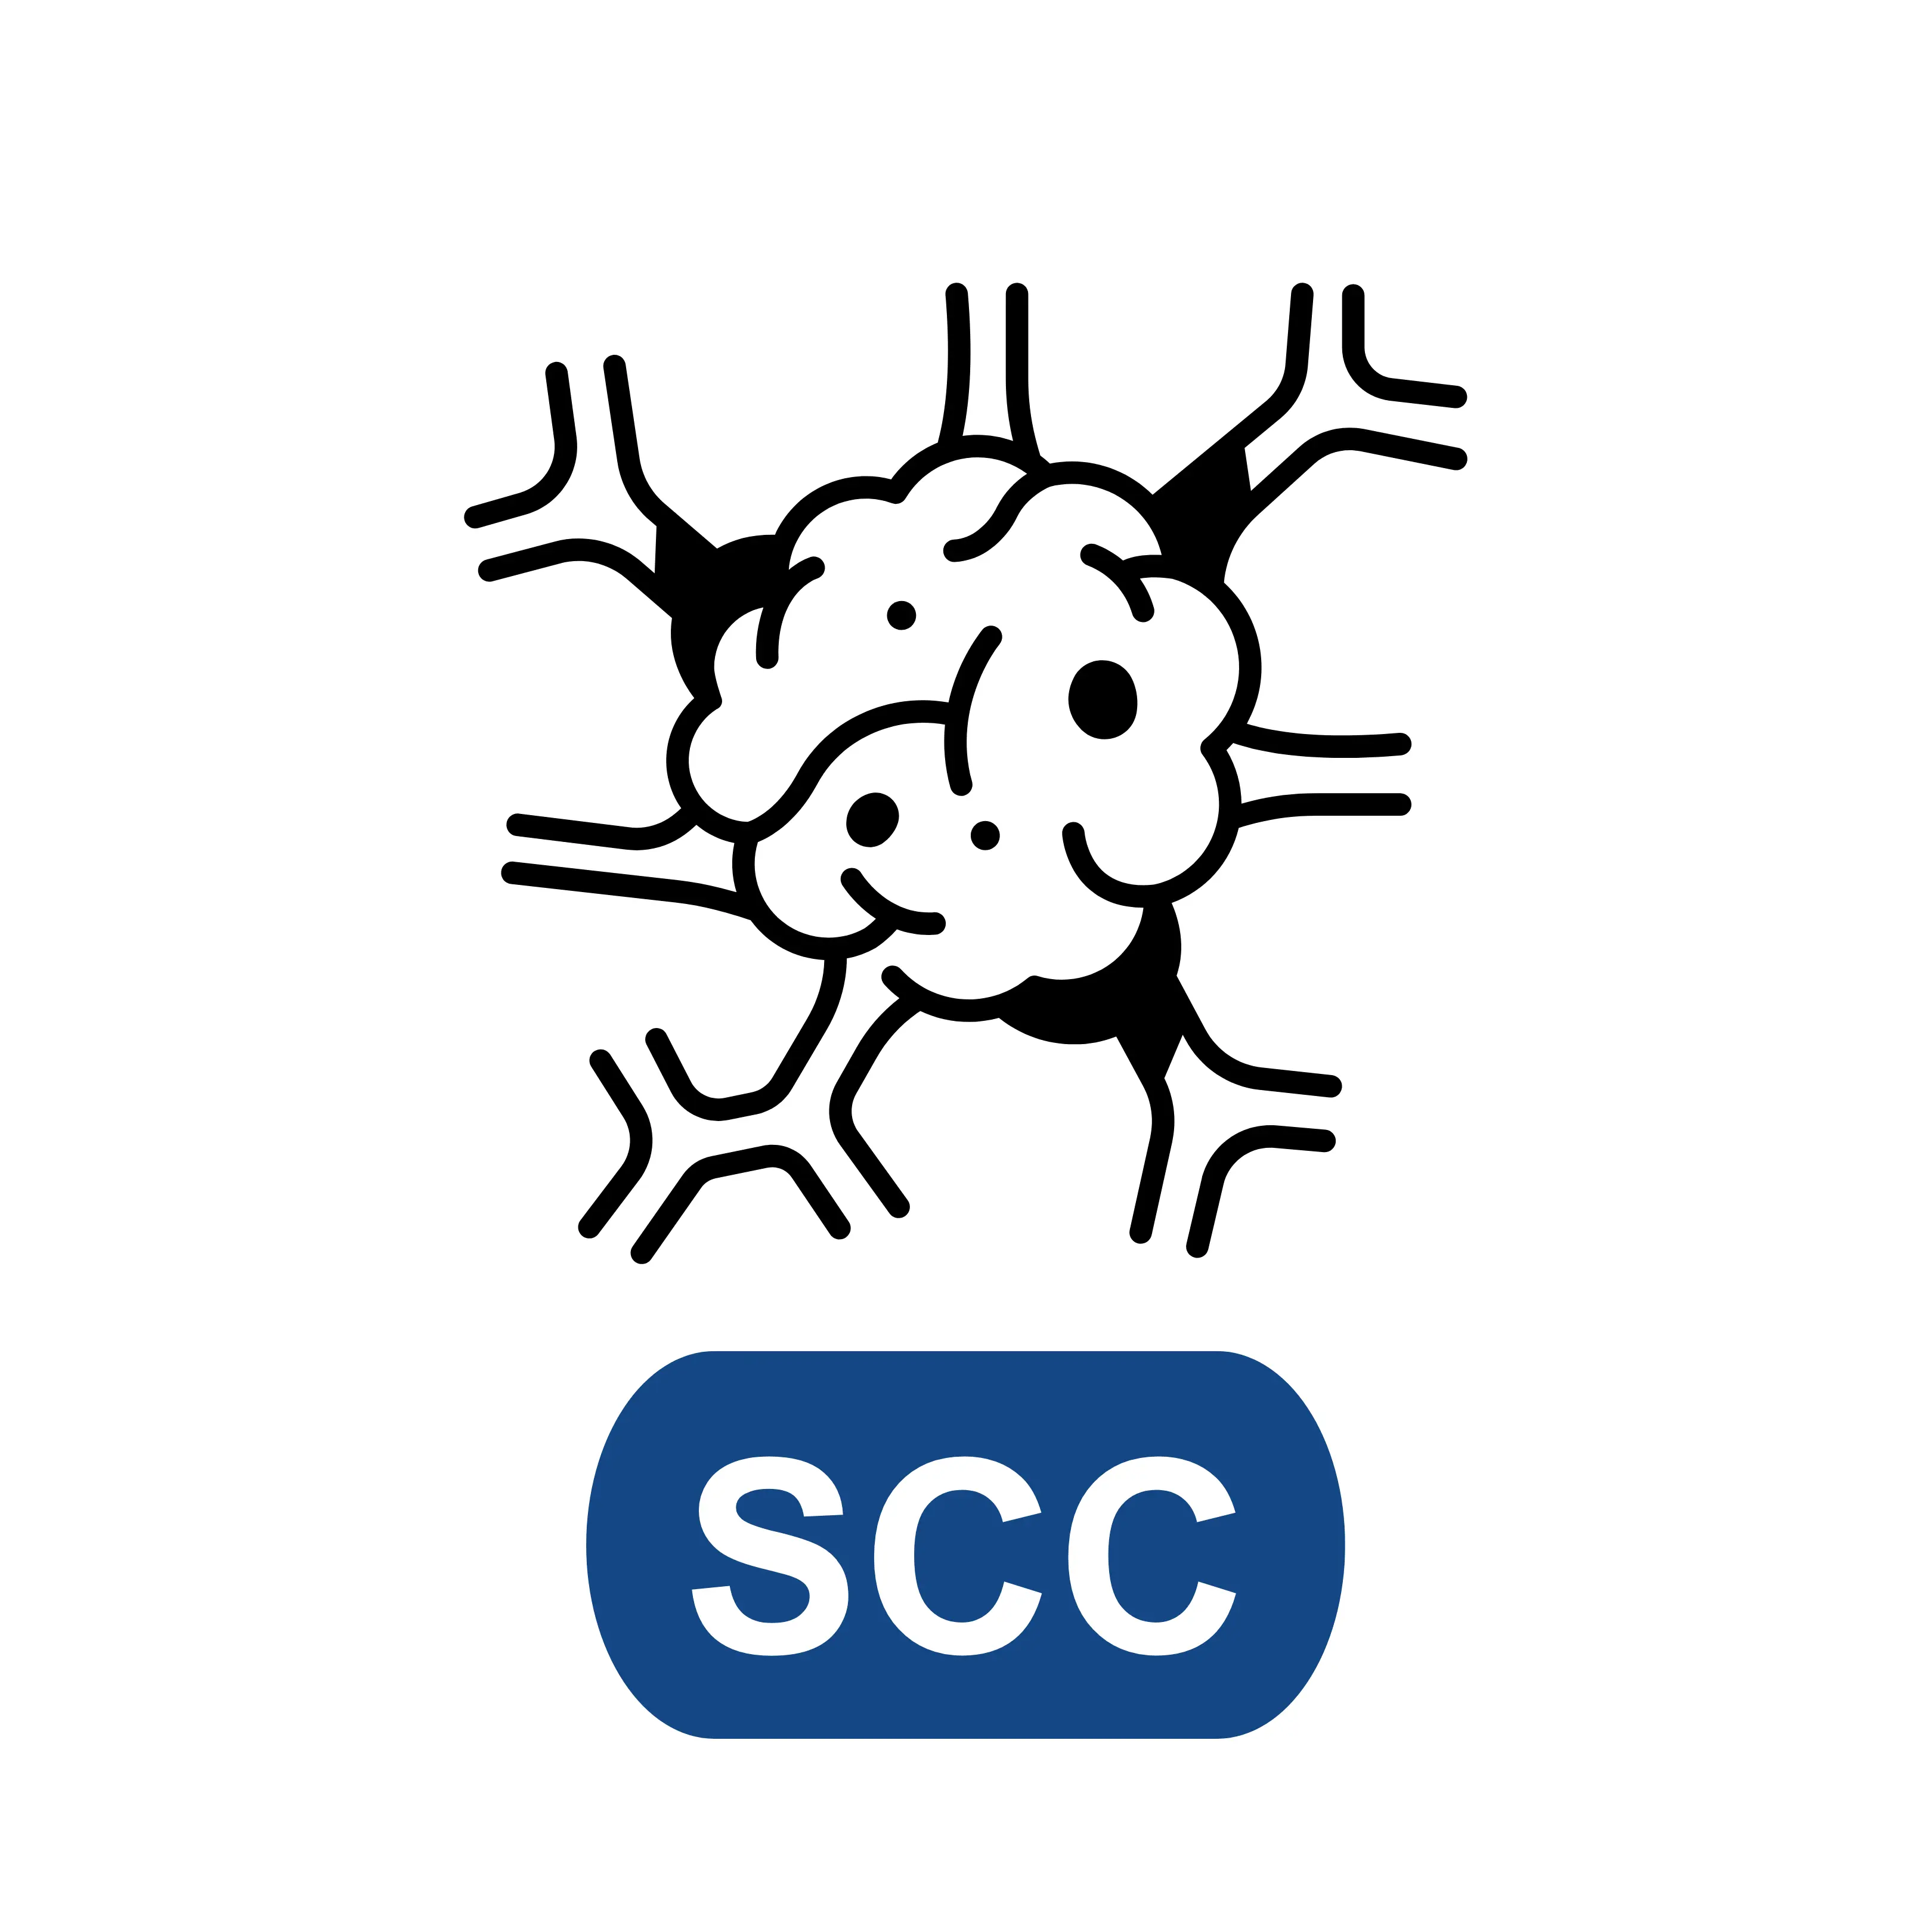 Squamous Cell Carcinoma (SCC)